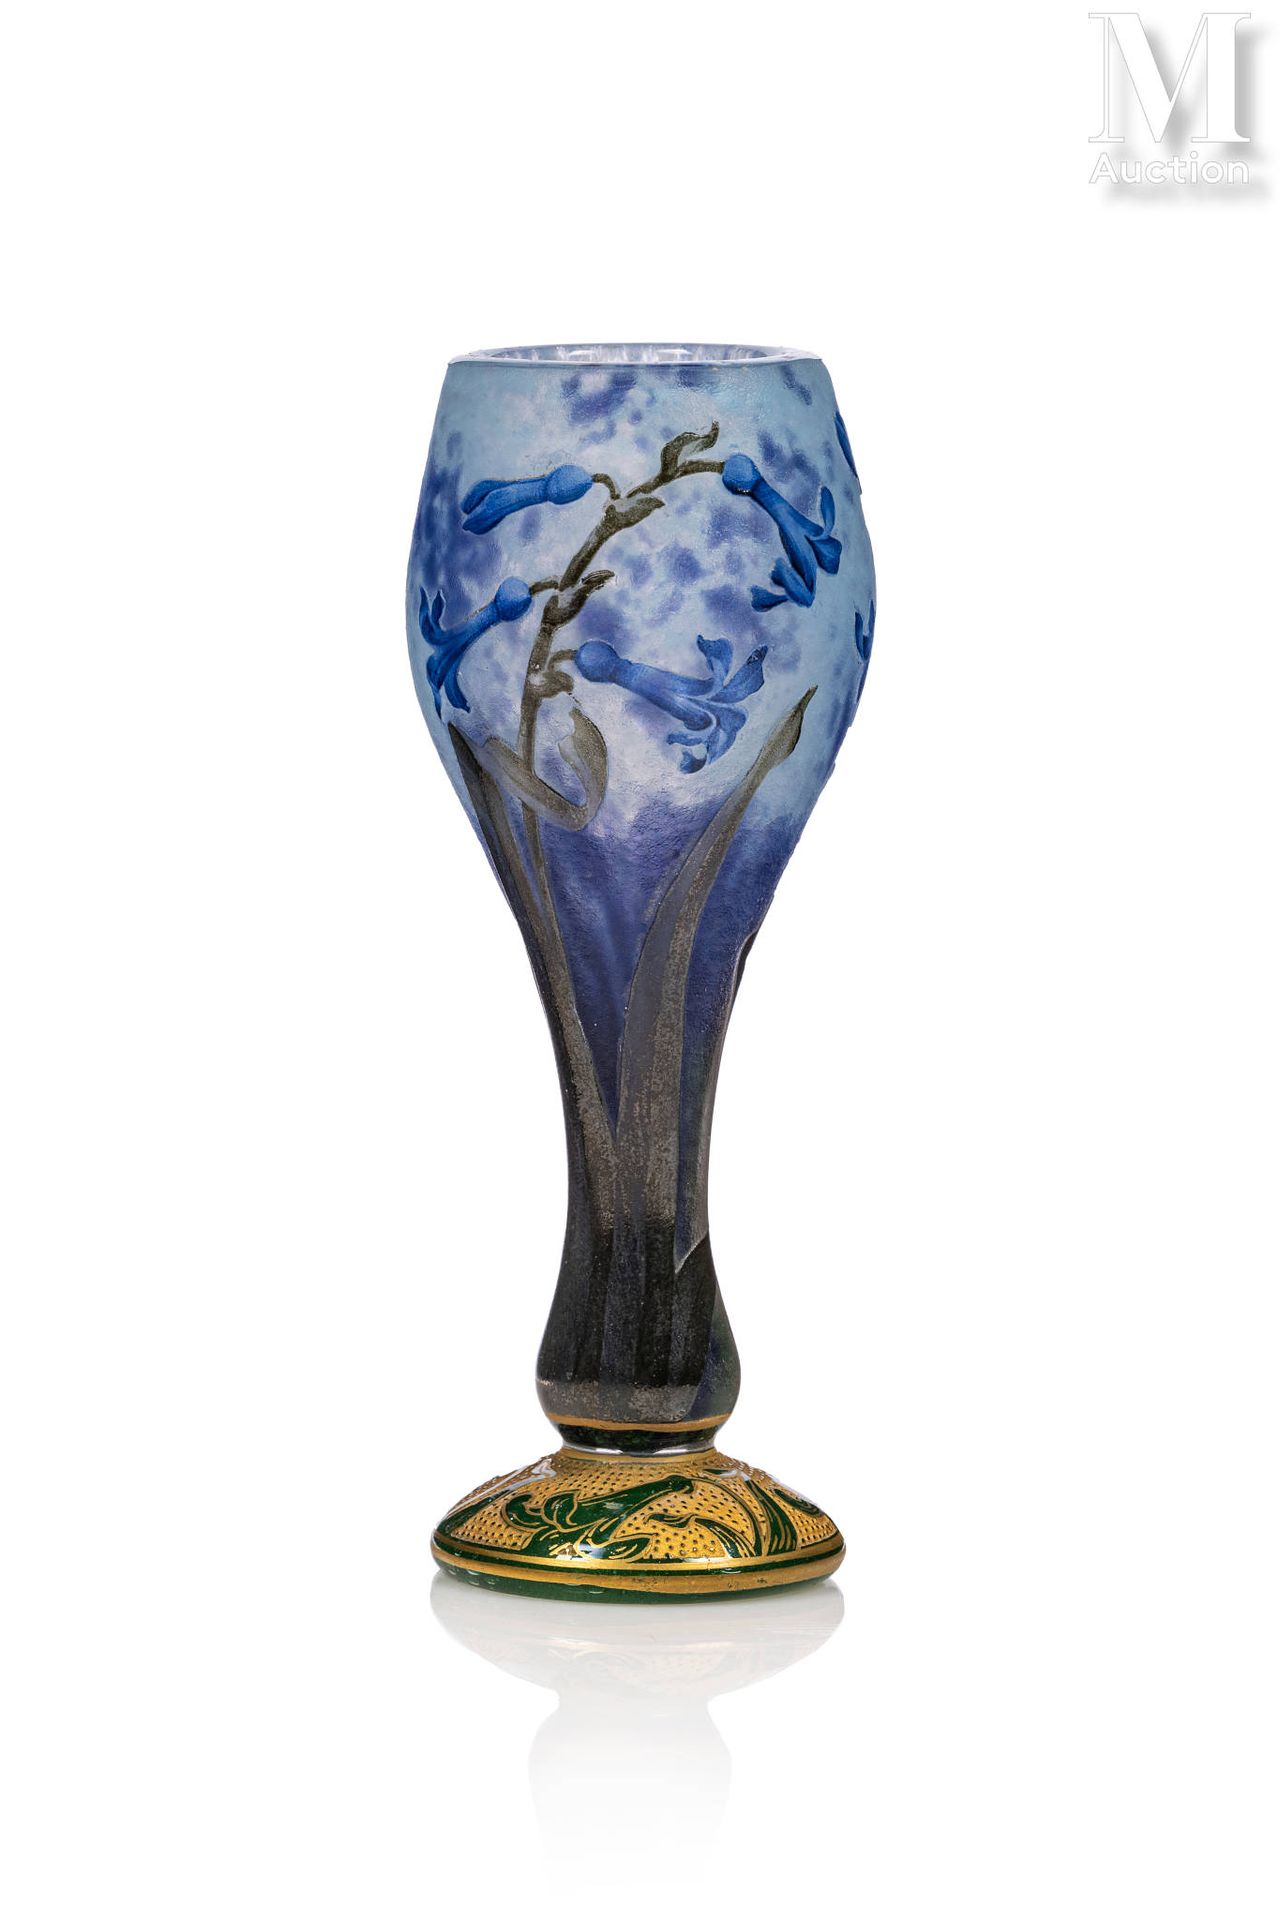 DAUM - Nancy "铃兰花

双层玻璃小花瓶，位于圆形底座上，在酸性磨砂背景上雕刻和上釉的多色风铃花装饰，并以蓝色夹层粉末为底色。

基座上装饰着金色珐&hellip;